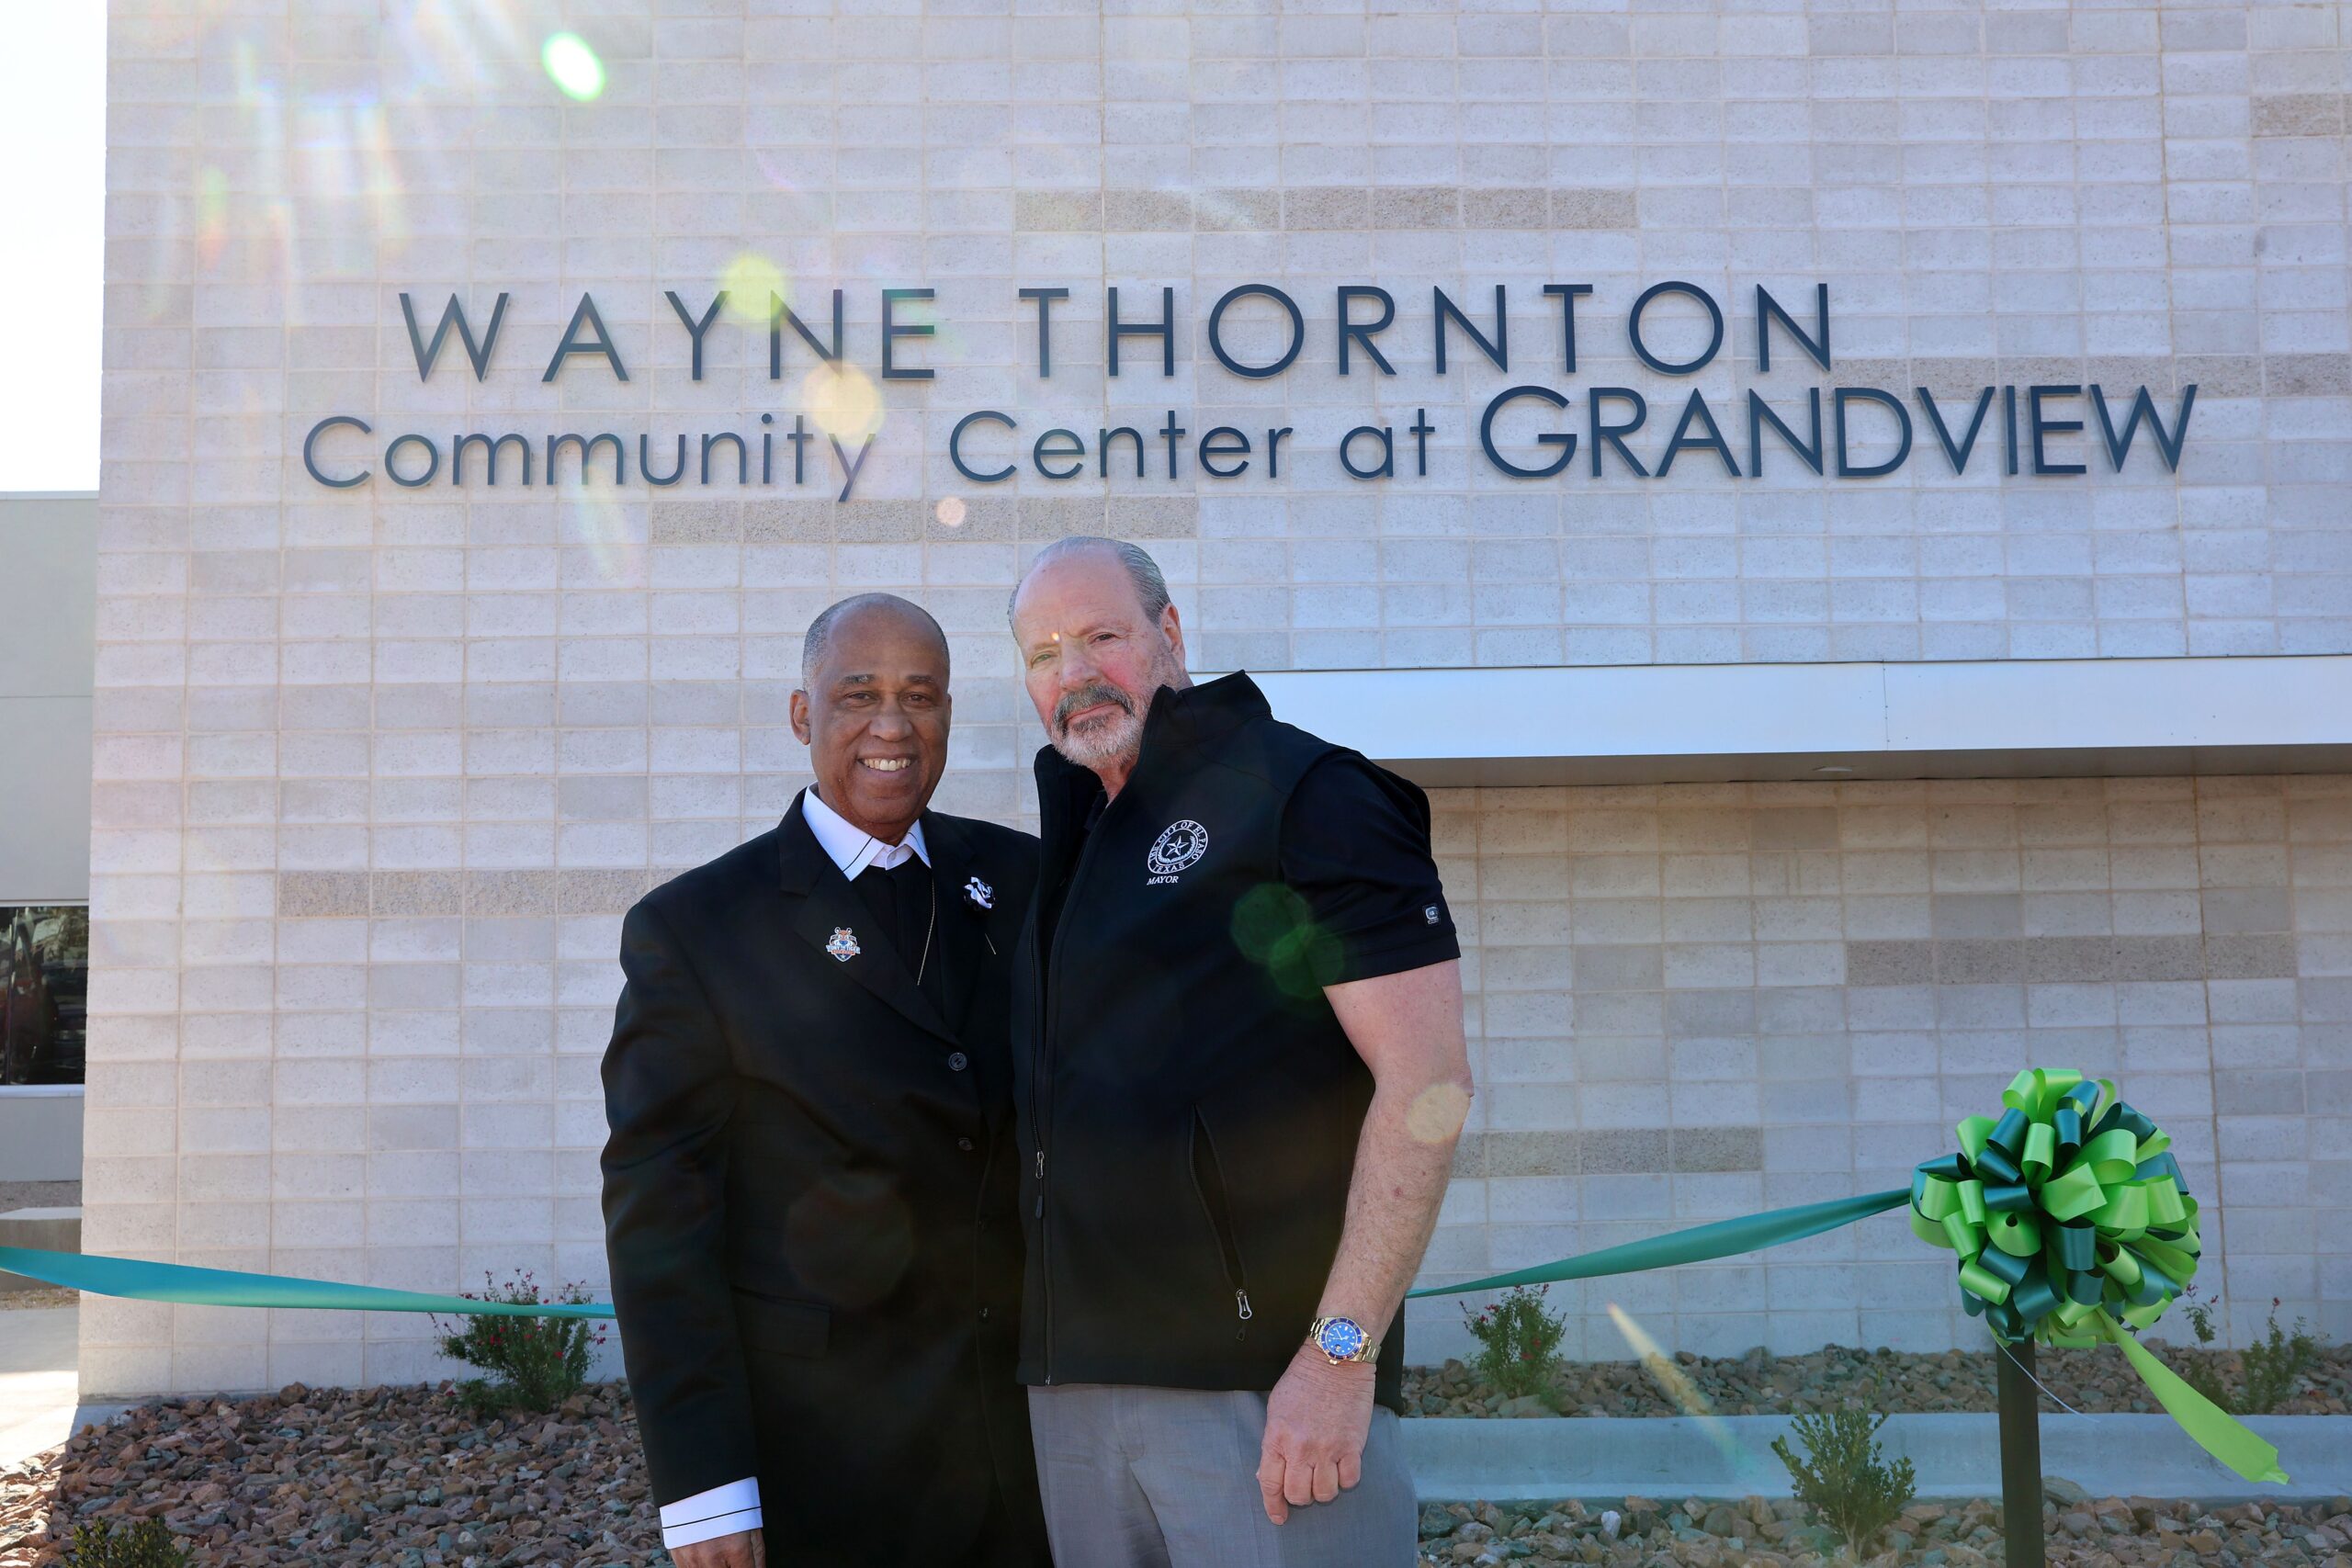 Wayne Thornton Community Center at Grandview